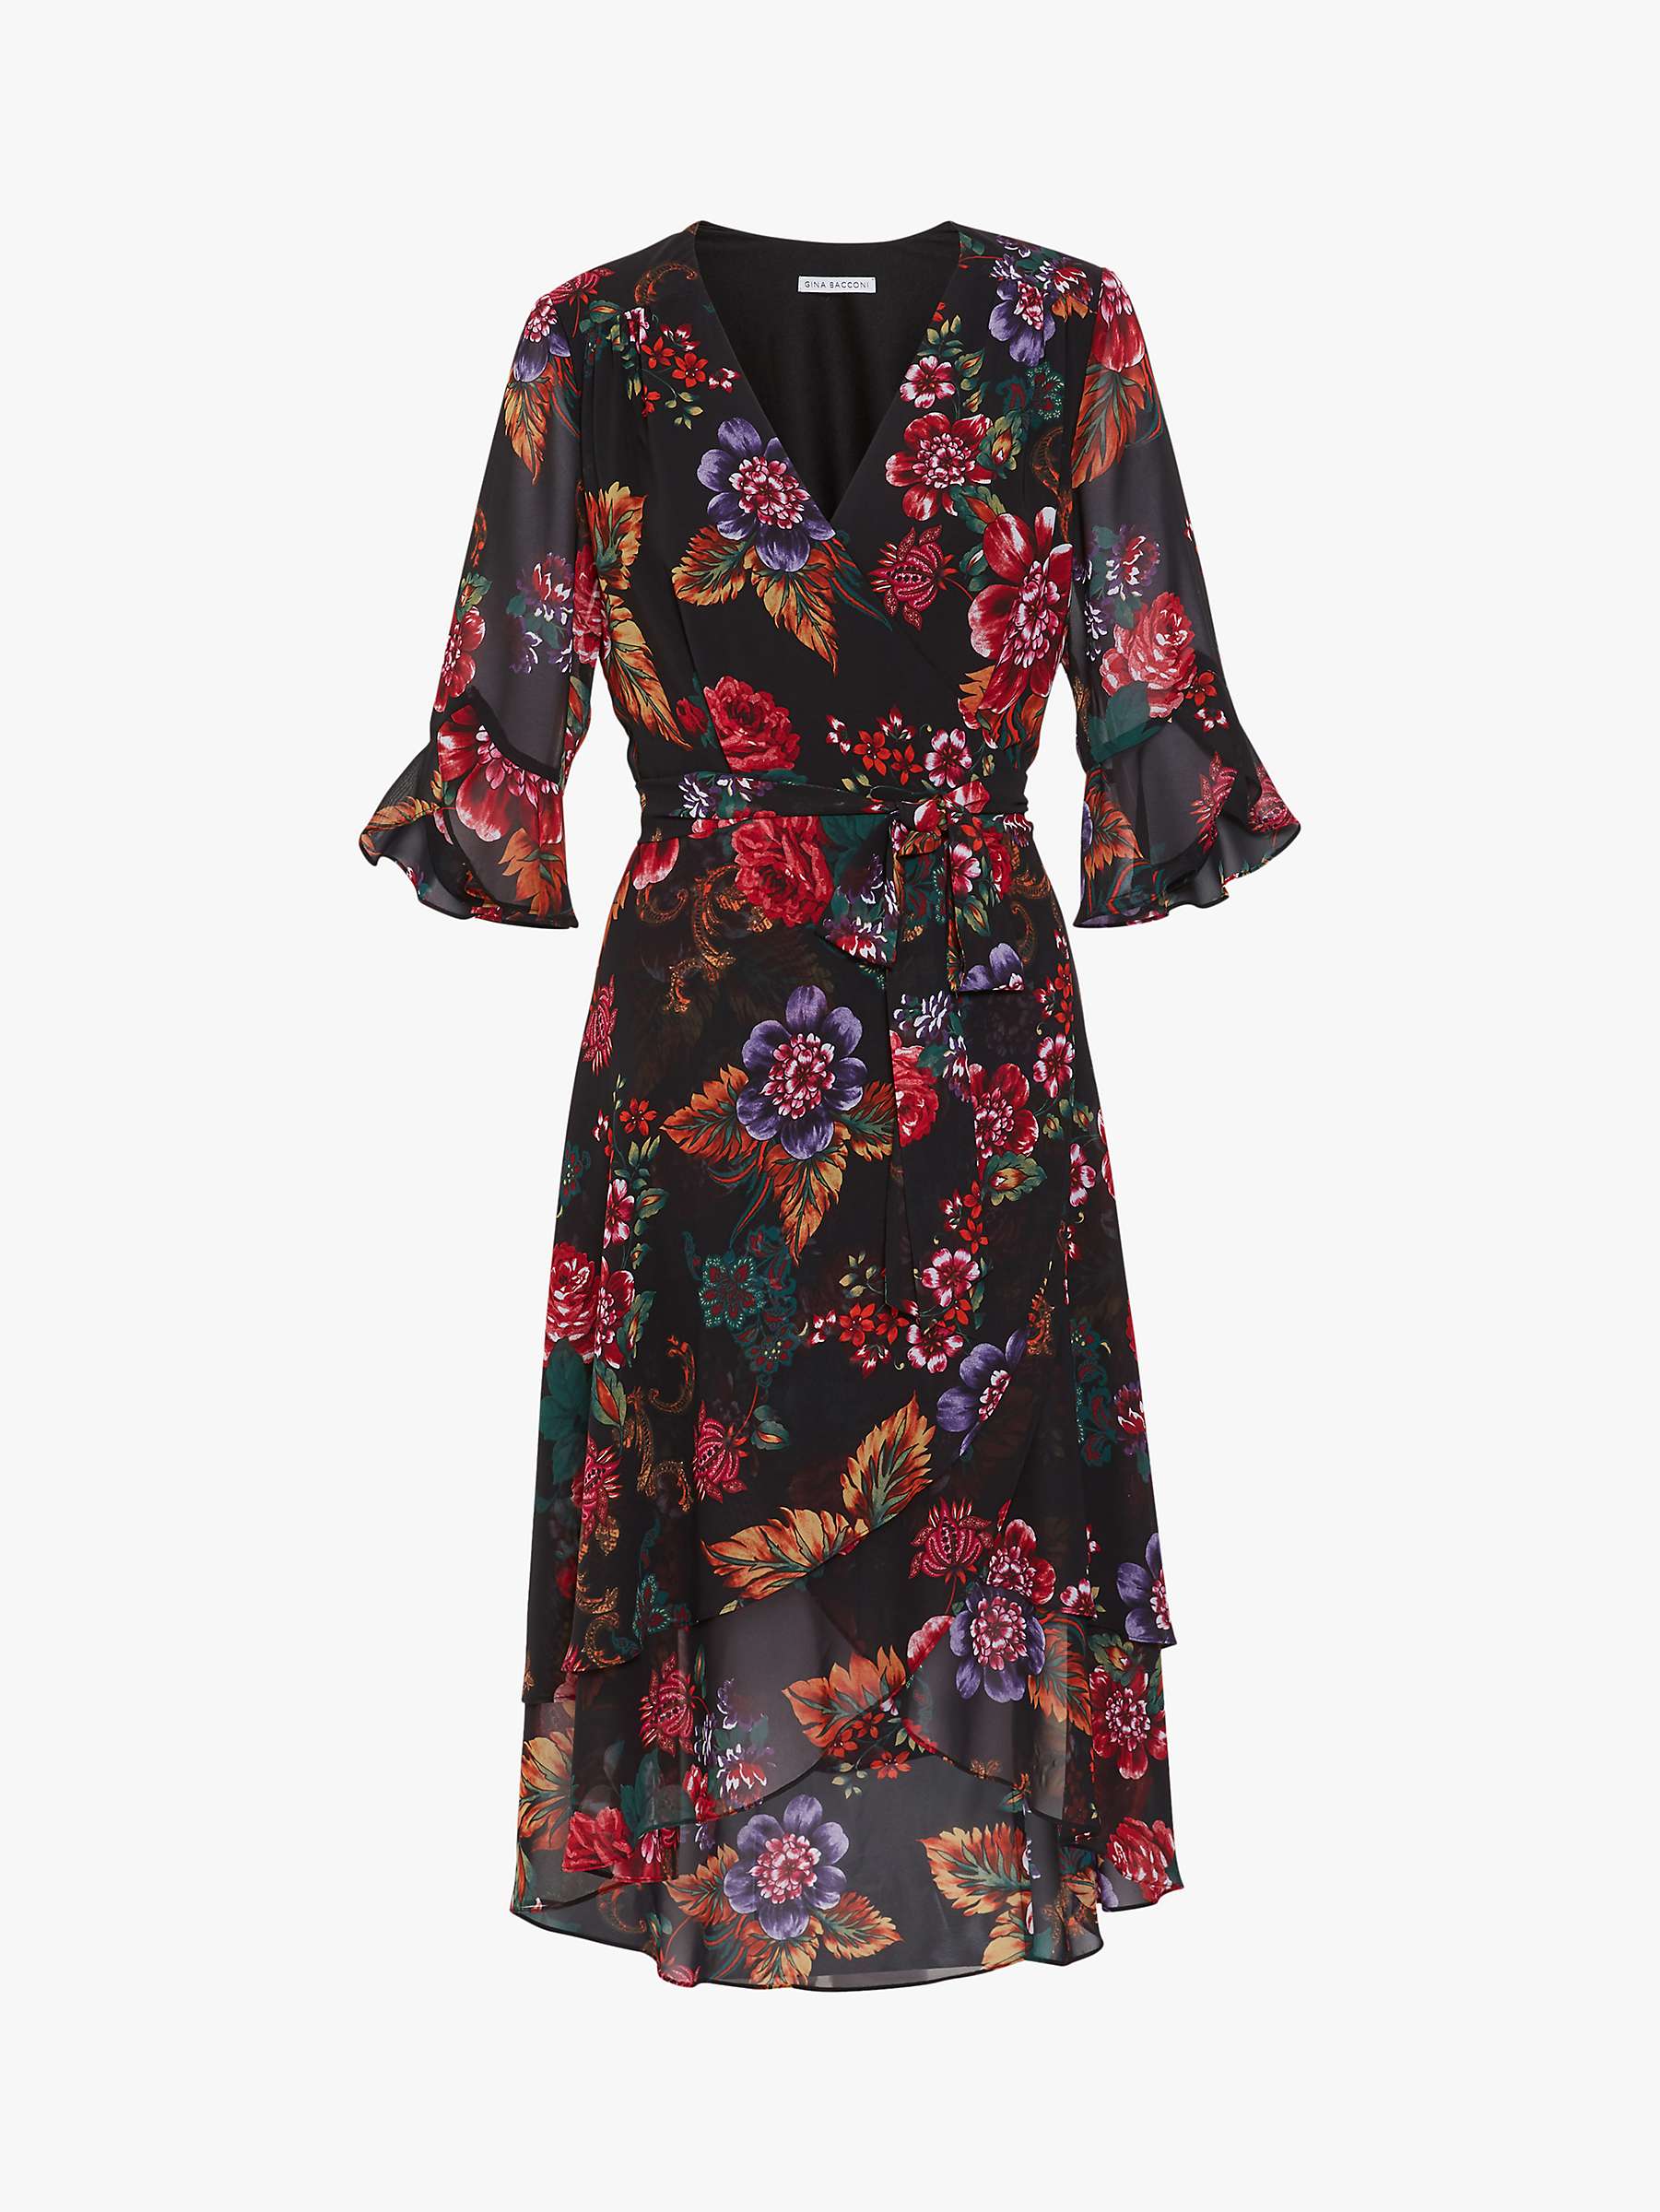 Buy Gina Bacconi Marilene Dress, Black/Multi Online at johnlewis.com